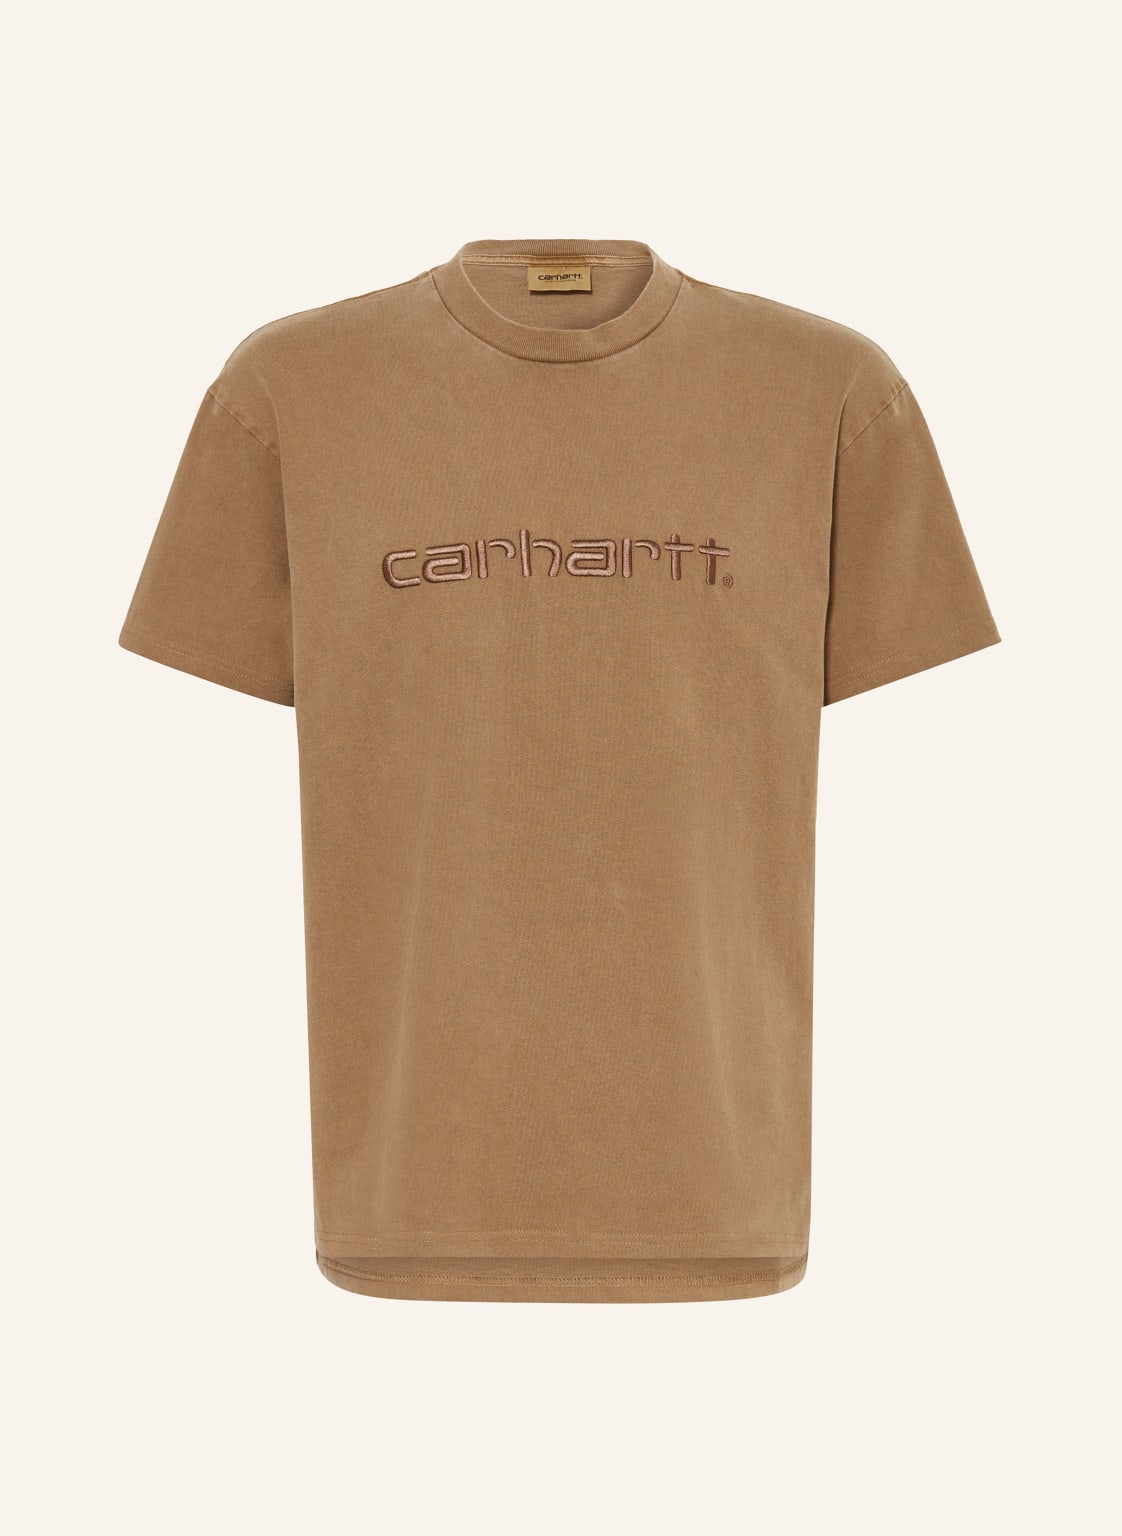 Carhartt Wip T-Shirt braun von Carhartt WIP